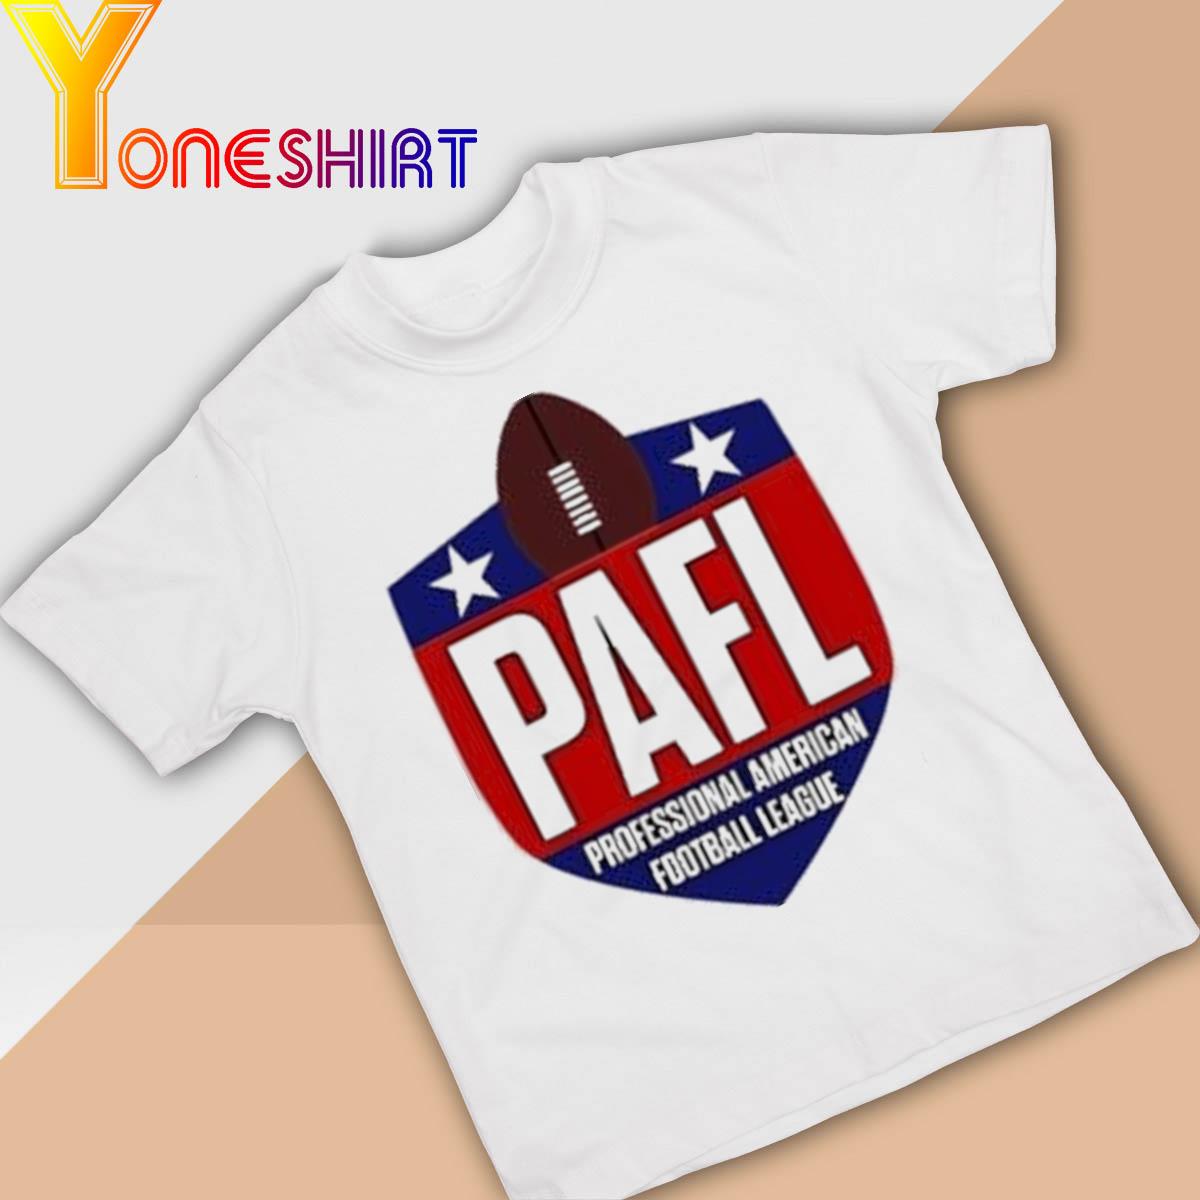 Pafl Professional American Football League Shirt